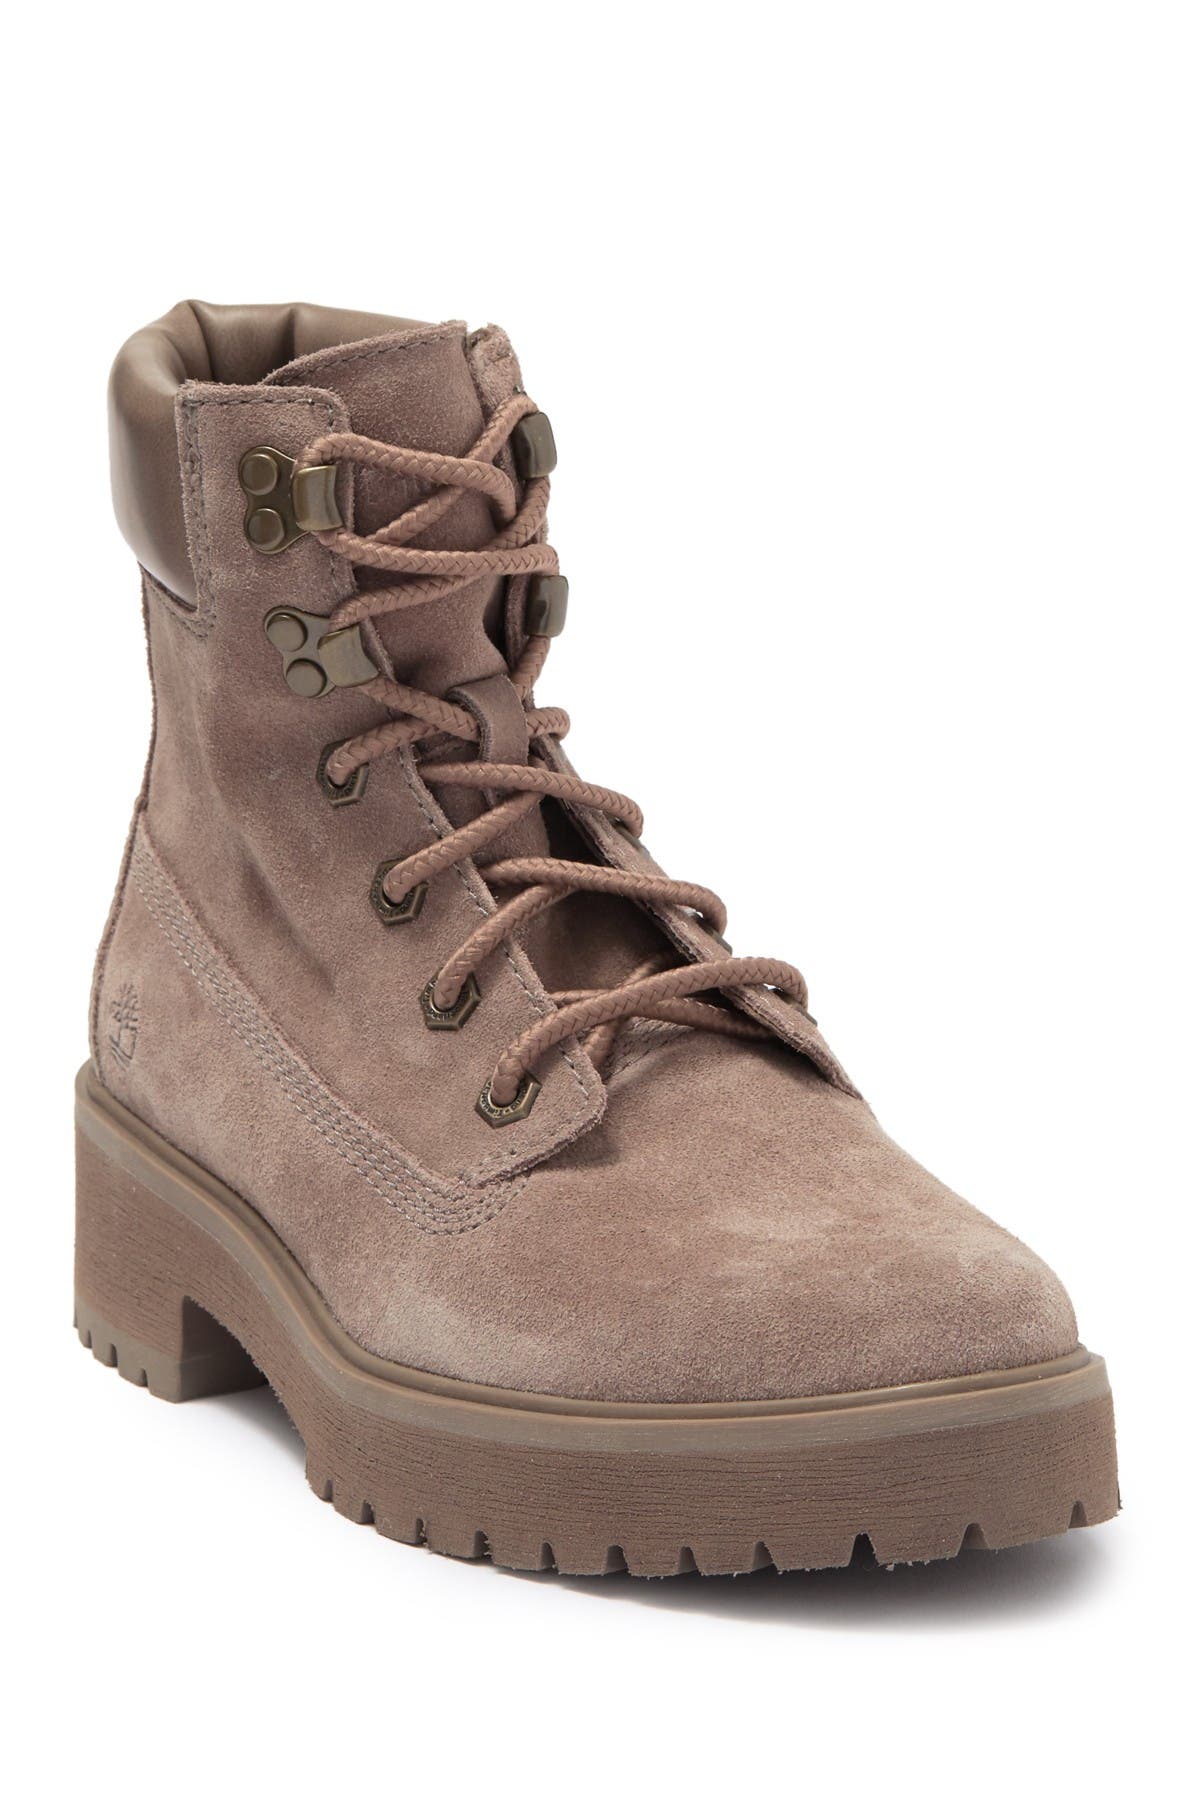 timberland romeo boots